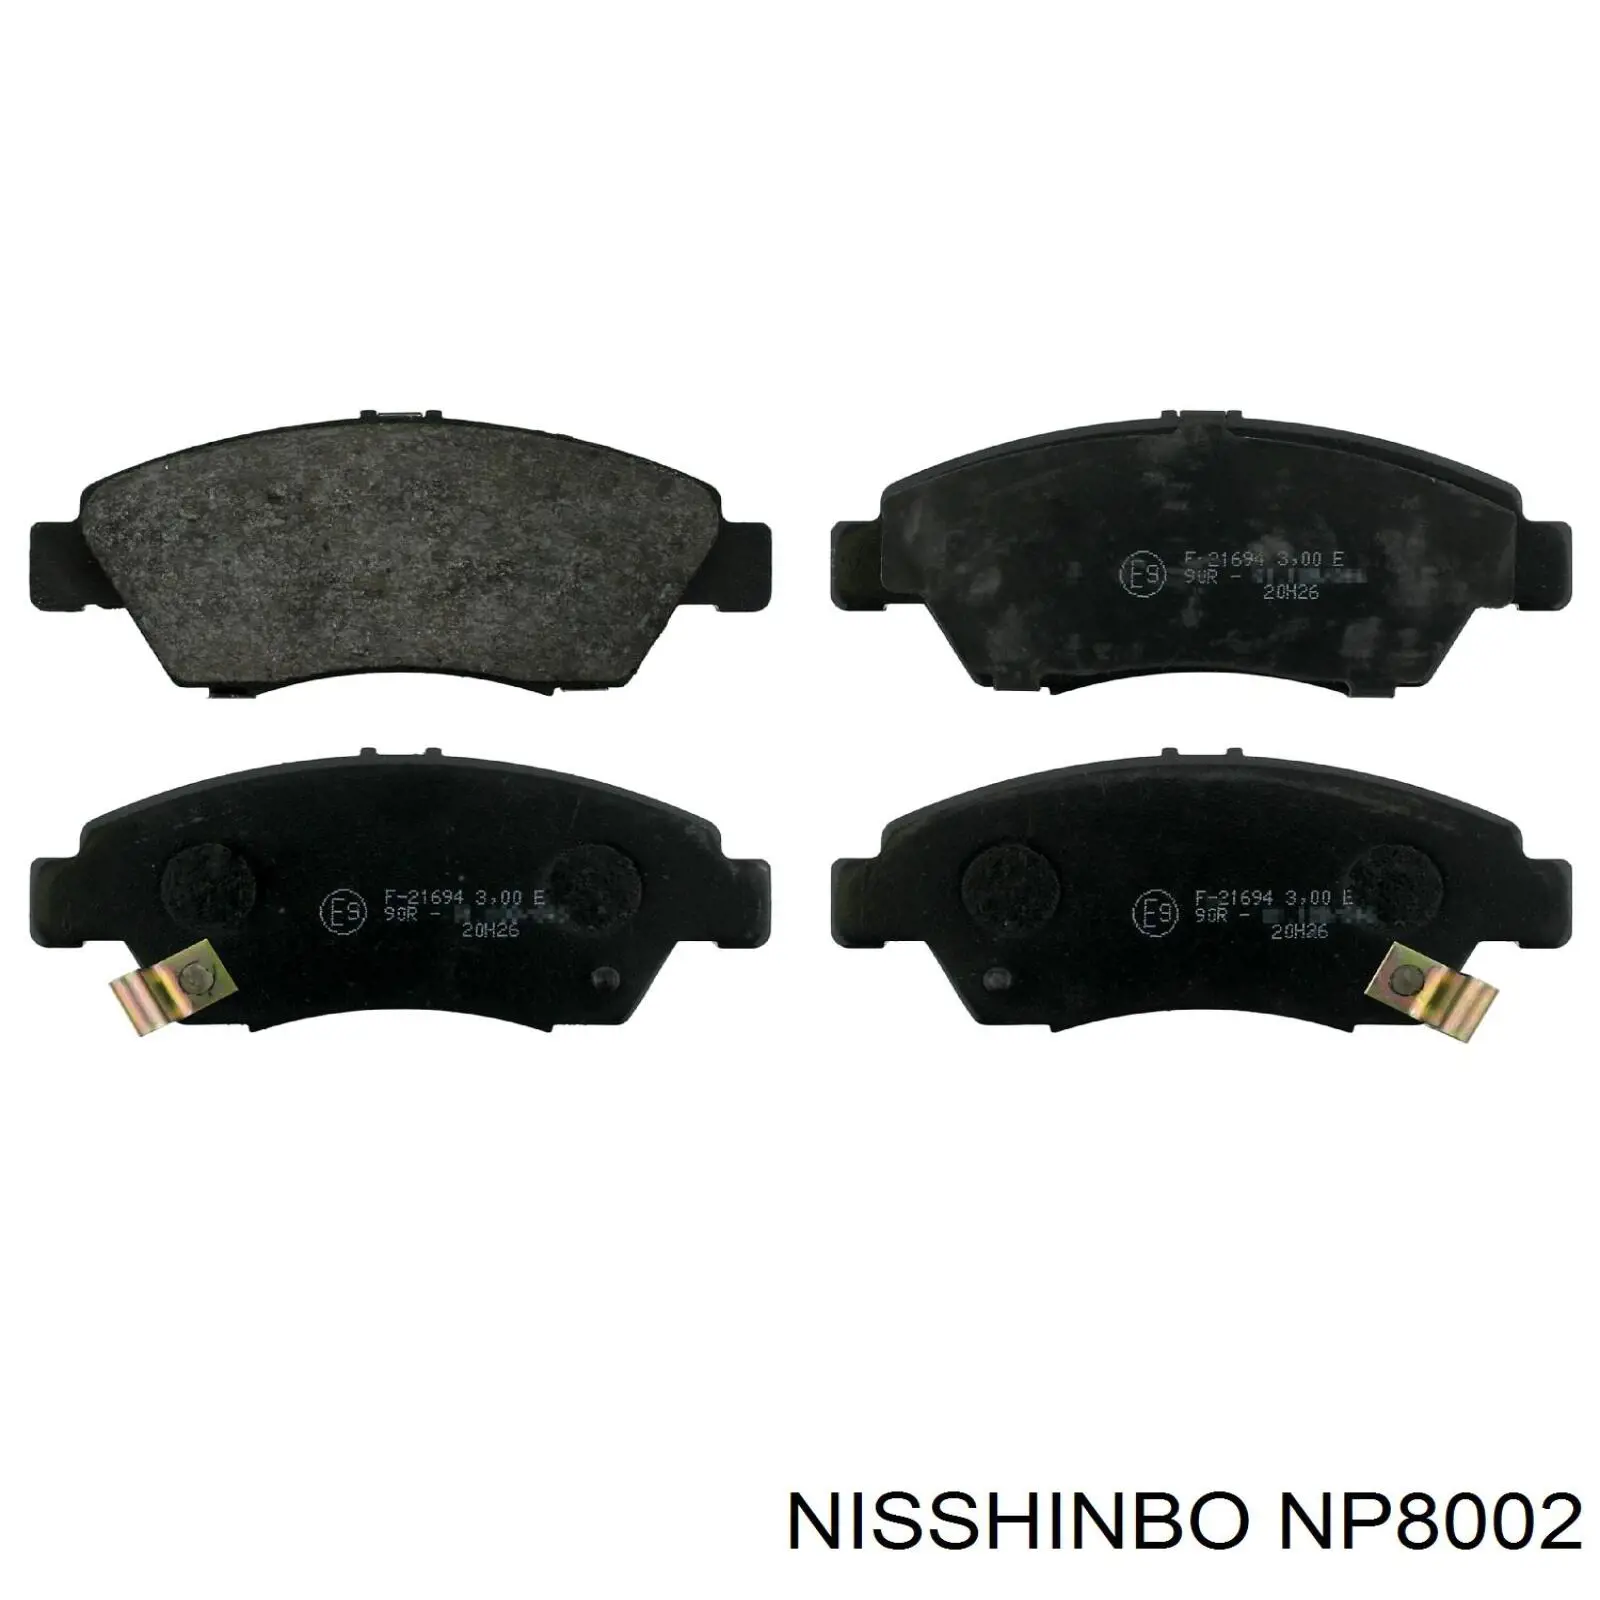 NP8002 Nisshinbo pastillas de freno delanteras